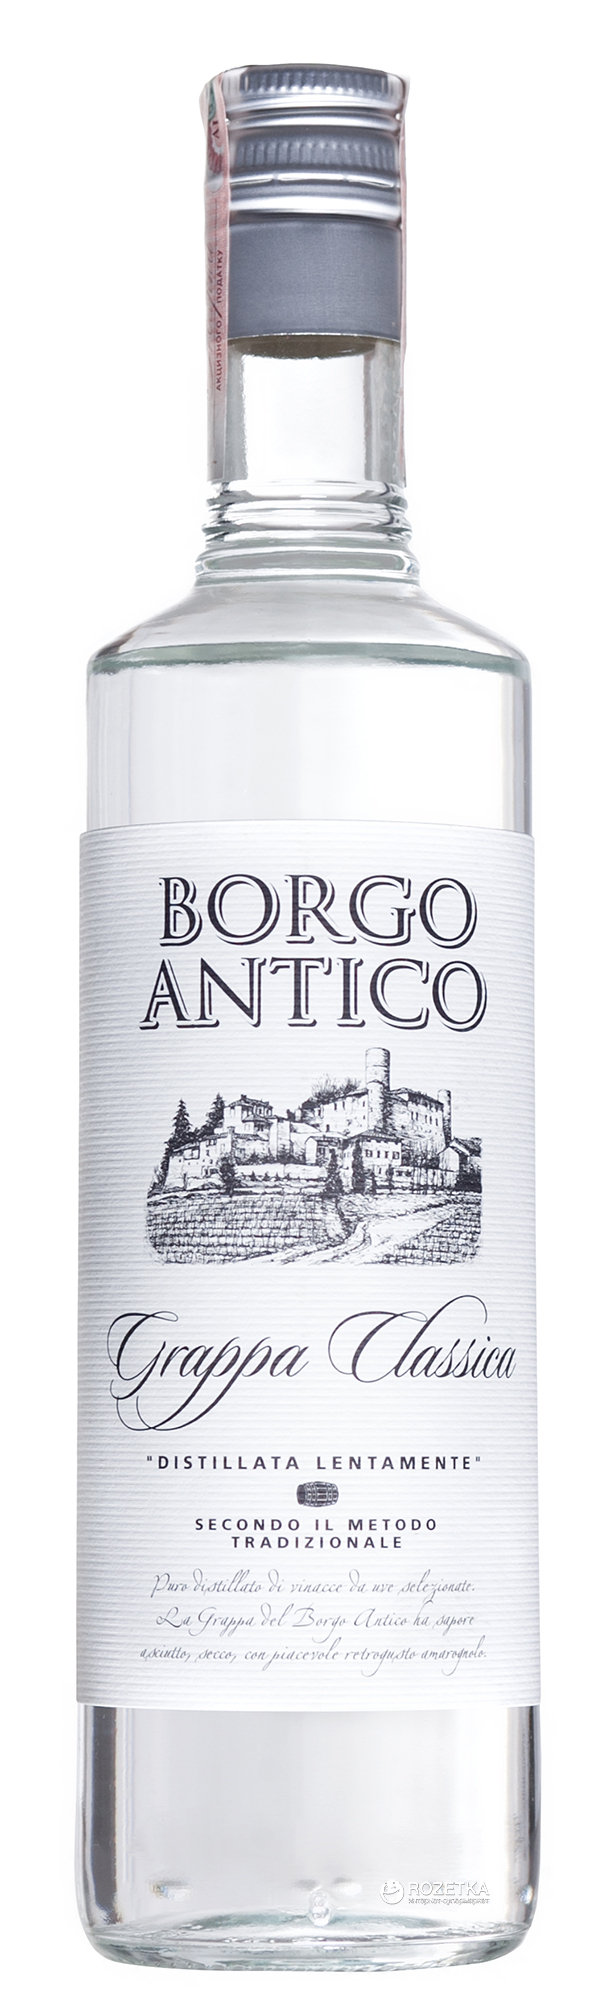 Акция на Граппа TOSO Borgo Antico Grappa Classica 0.7 л 40% (8002915005141) от Rozetka UA